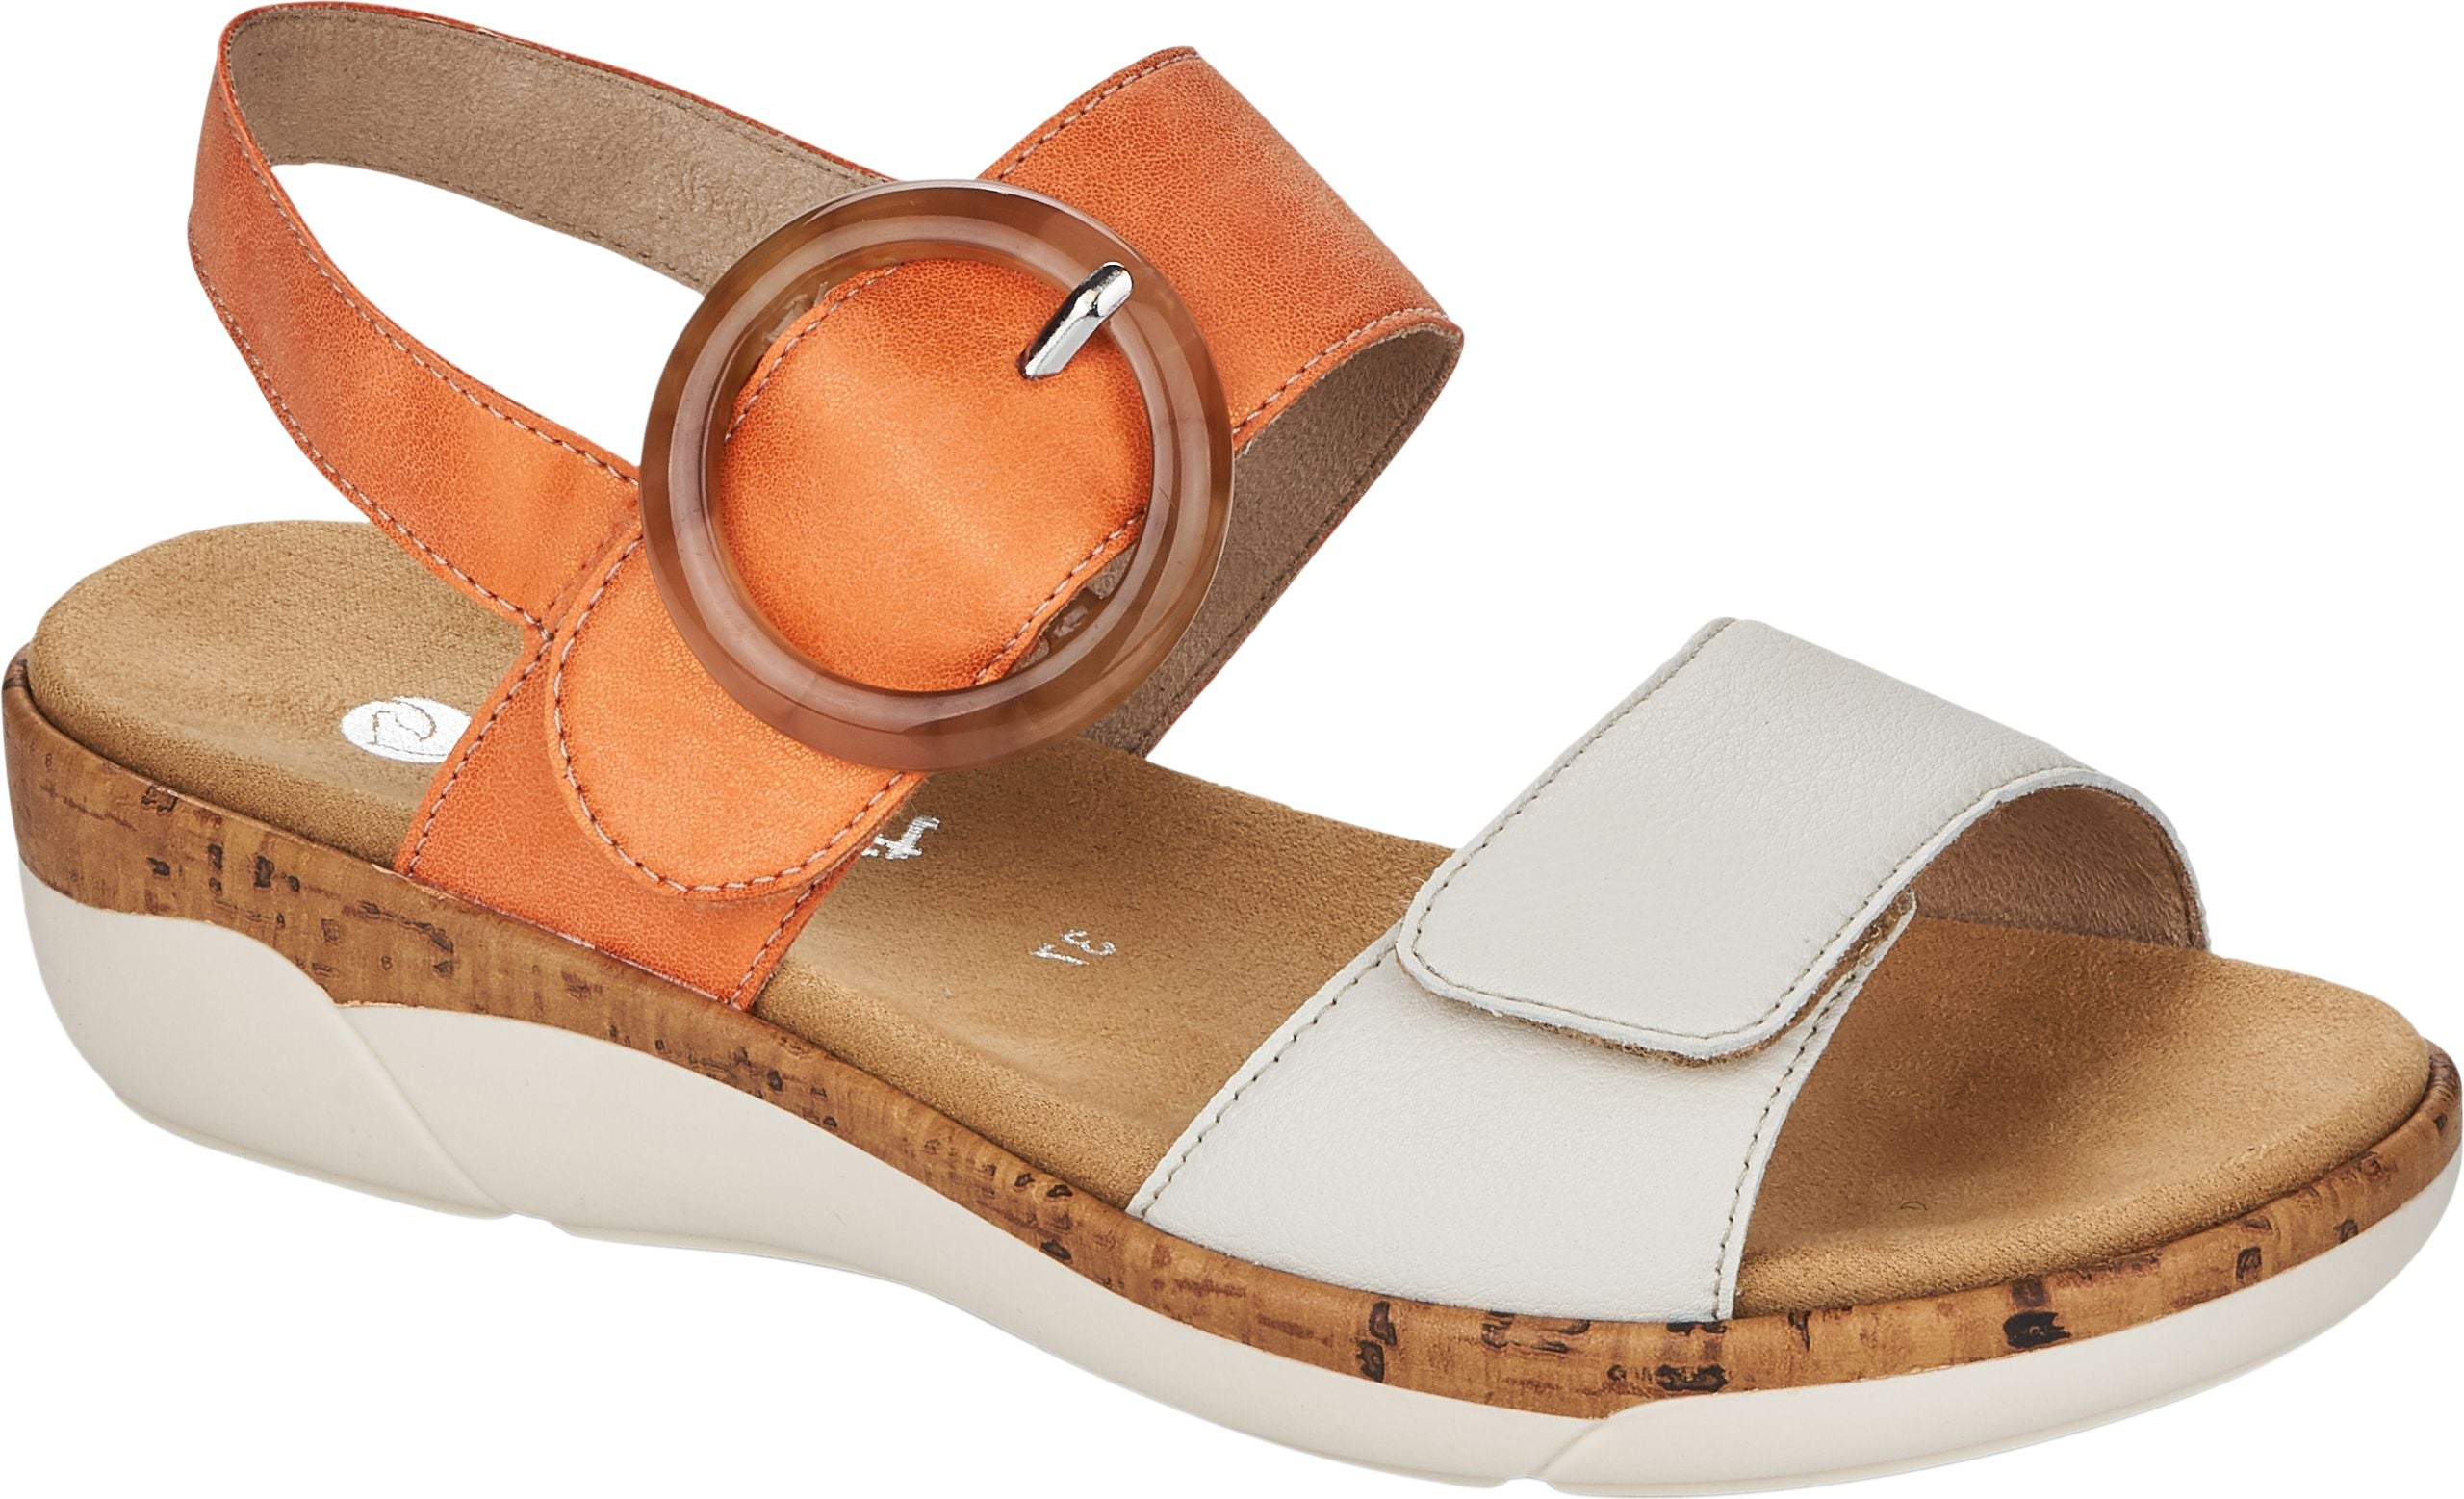 Offwhite/Orange Sandal